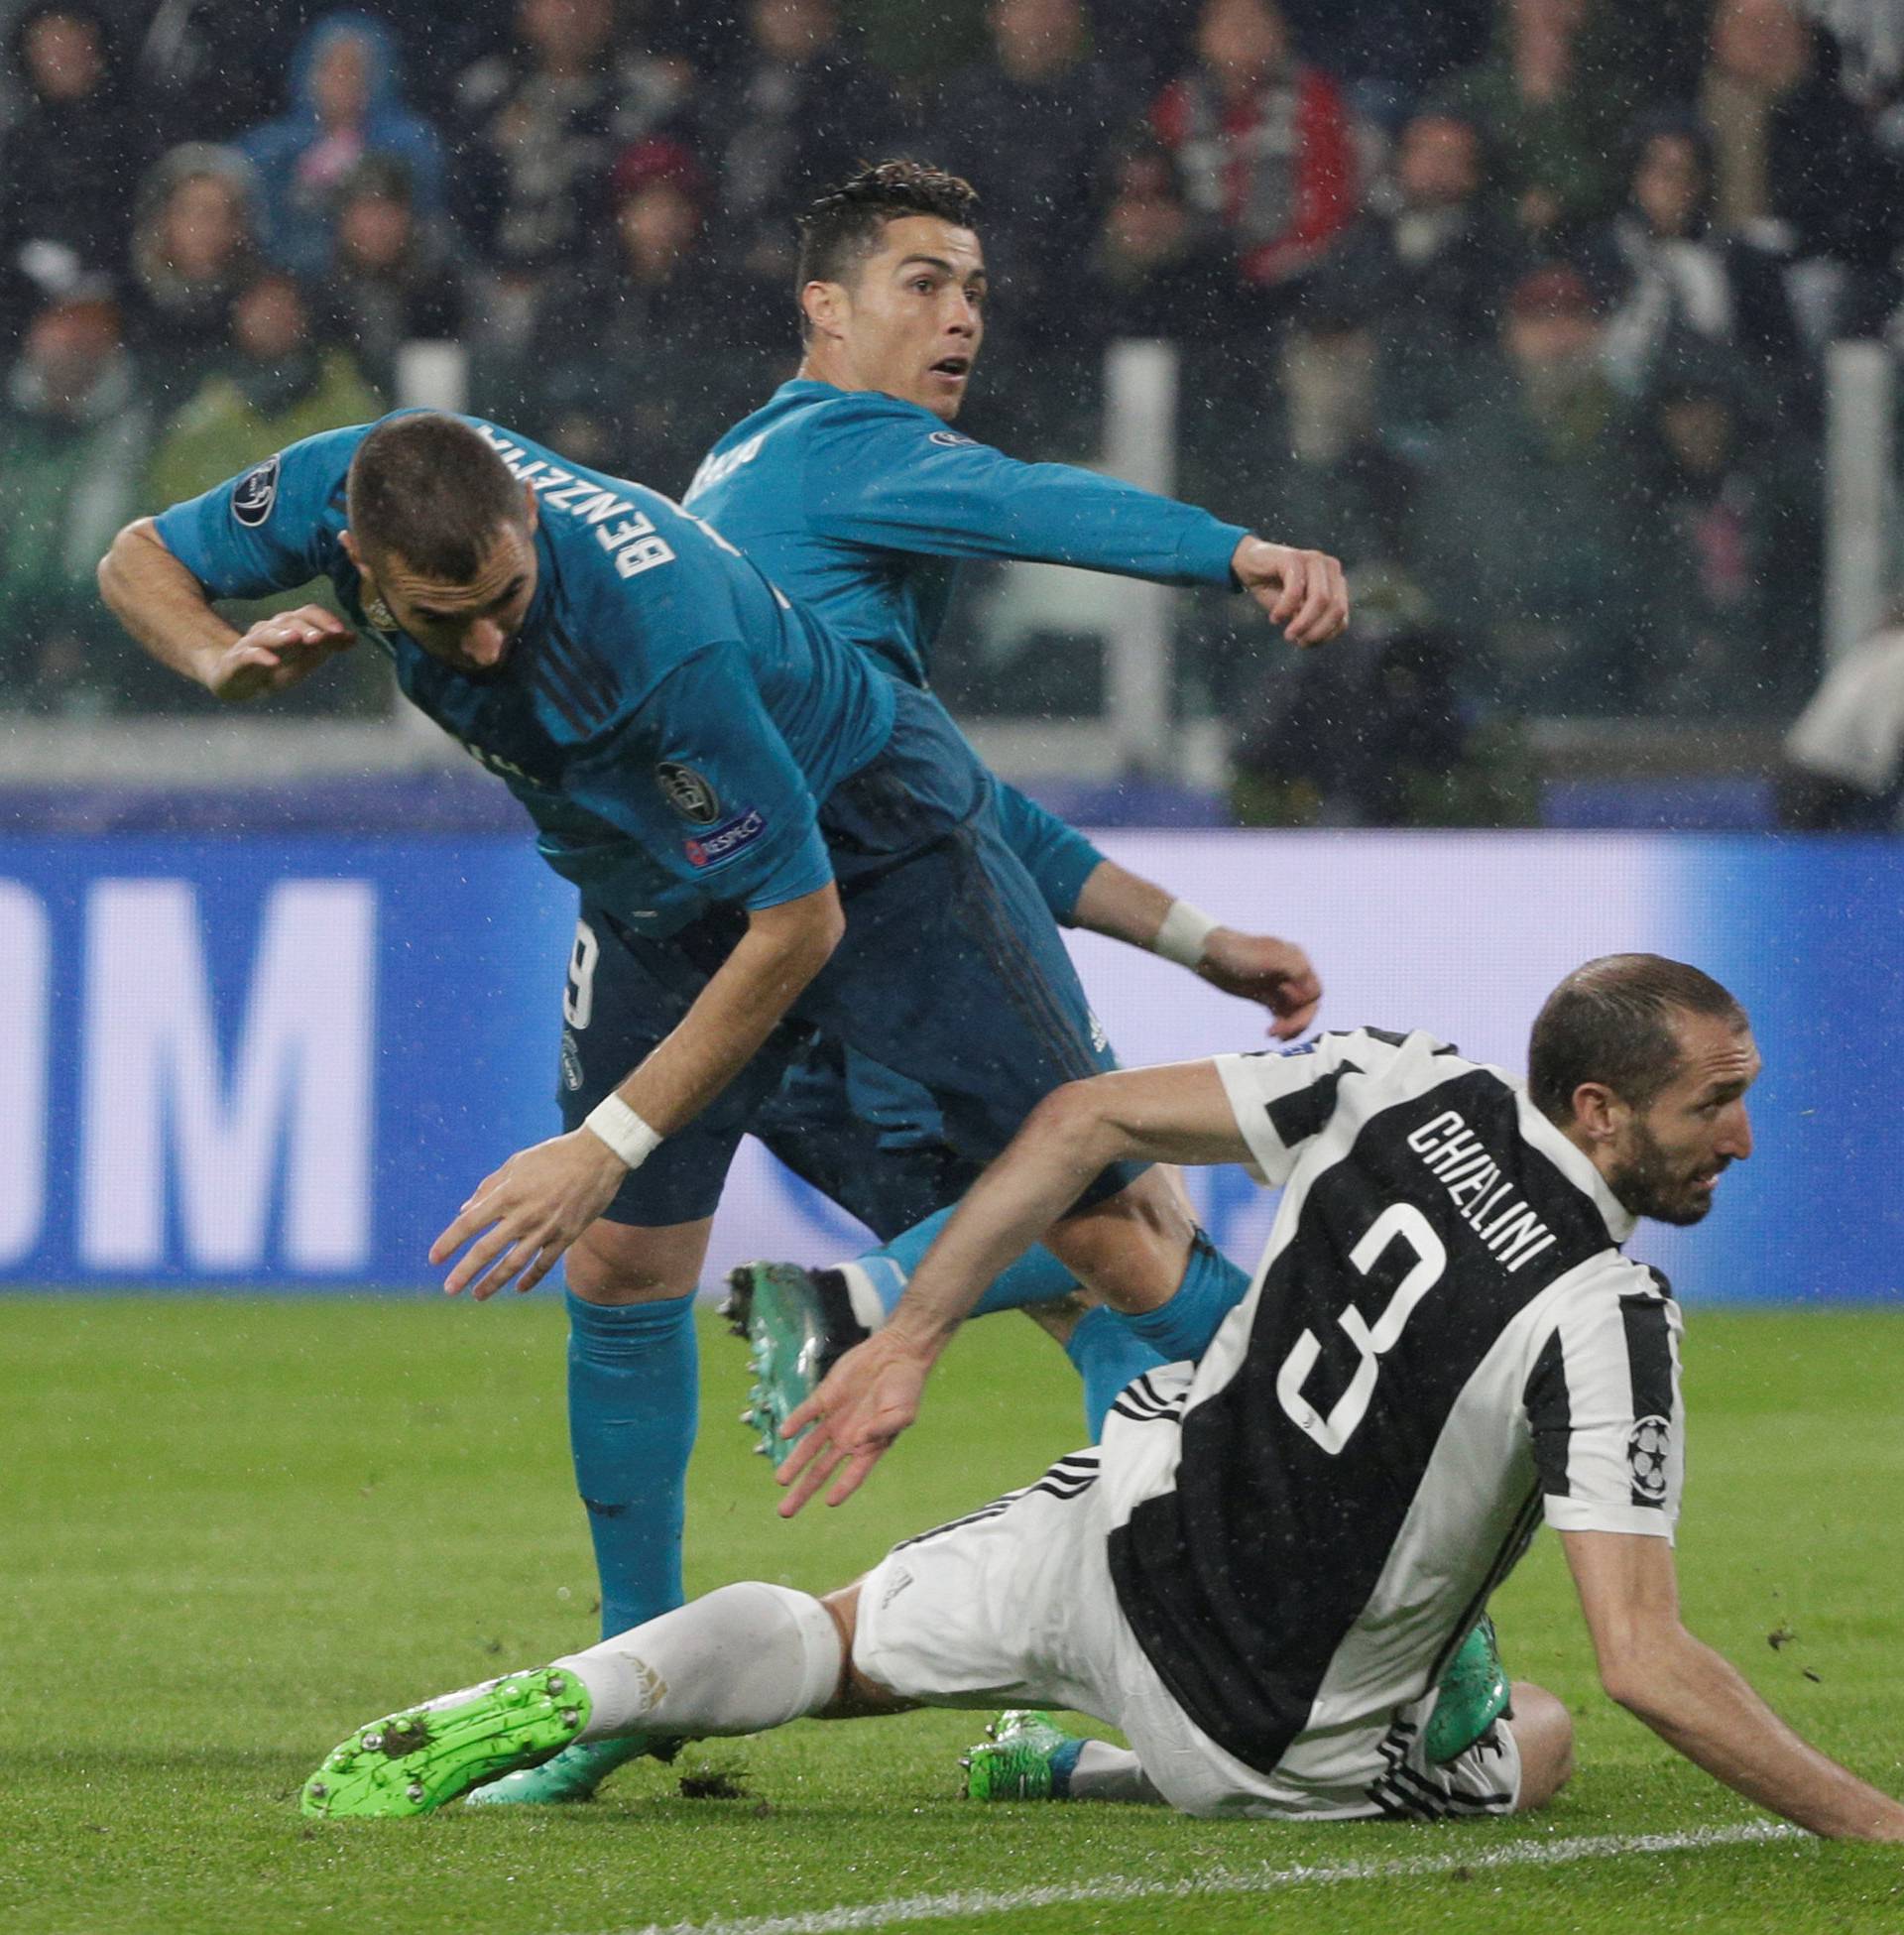 Champions League Quarter Final First Leg - Juventus vs Real Madrid